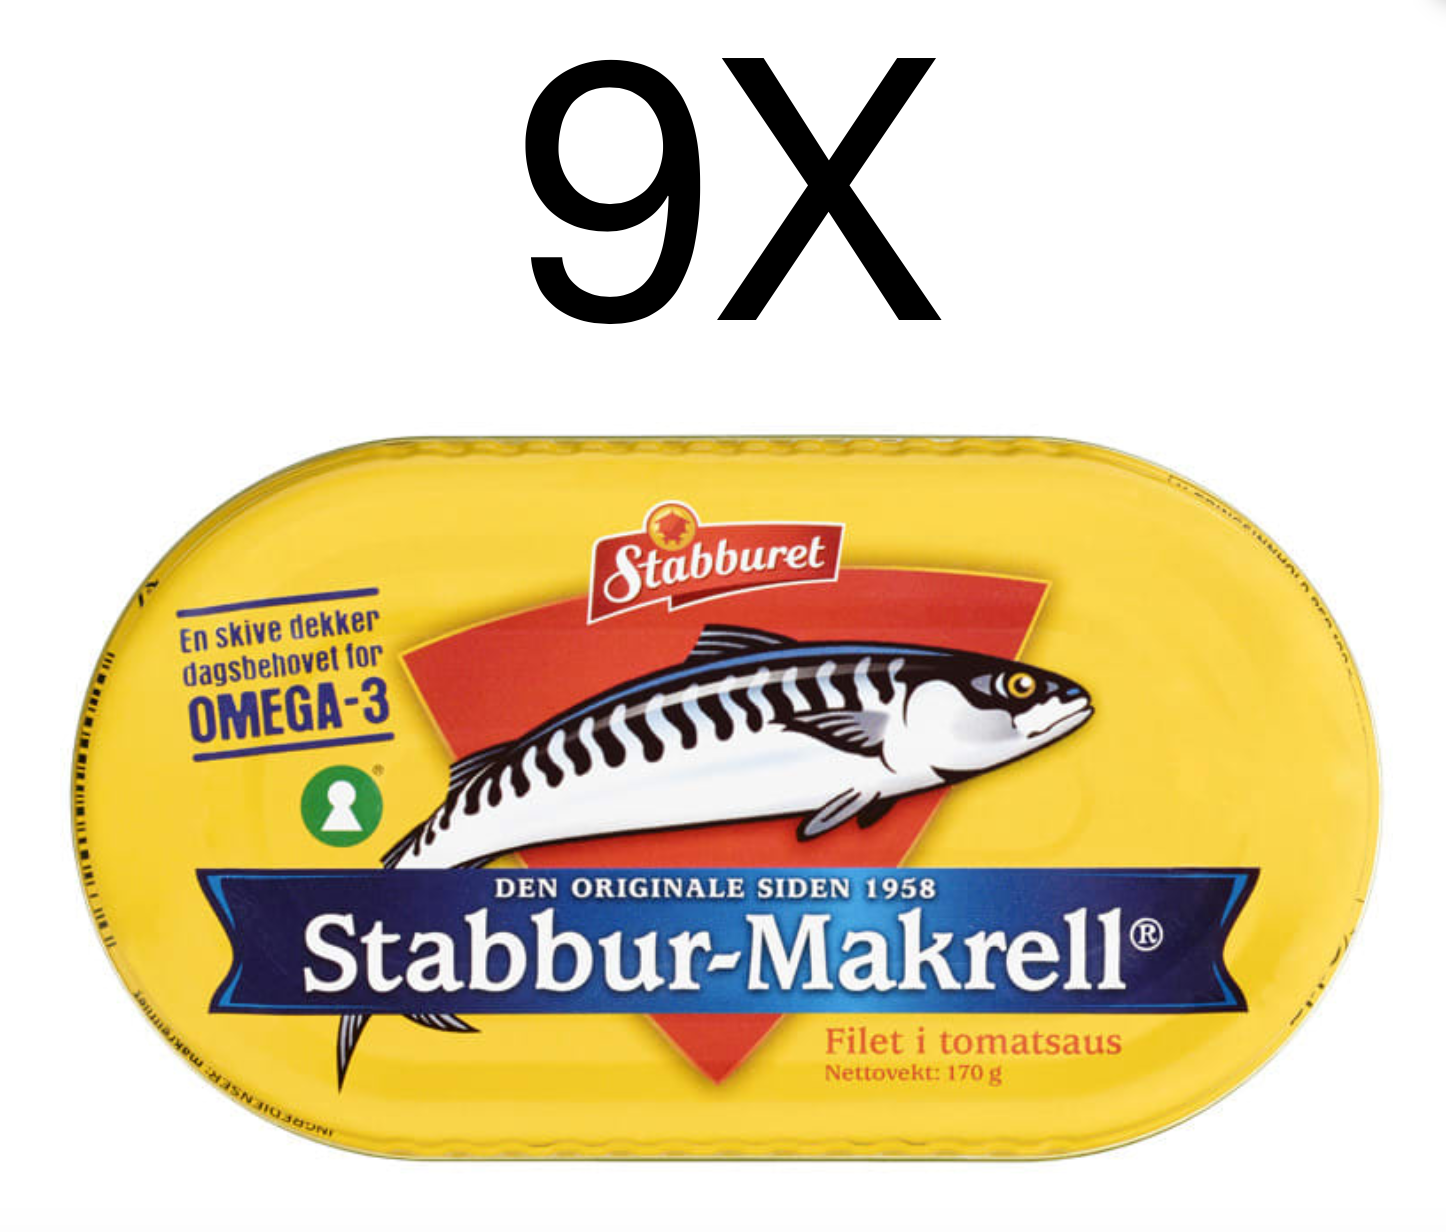 9X LOT Makrell i Tomat, Canned Norwegian Mackerel in Tomato Sauc